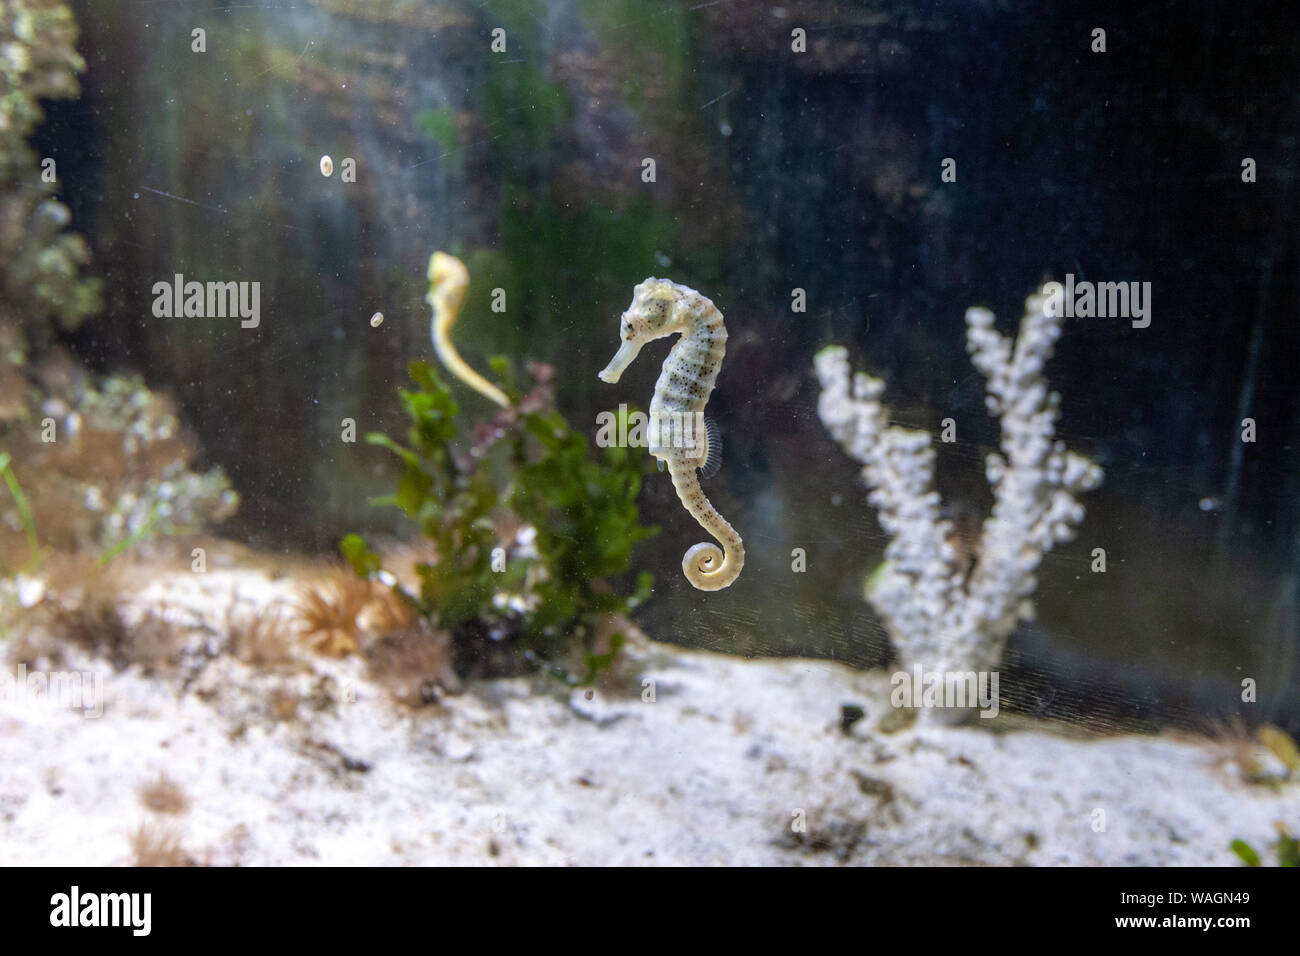 Seahorse in Marine aquarium, Royal Botanic Gardens,     Kew, London Borough of Richmond upon Thames, England, UK, Stock Photo